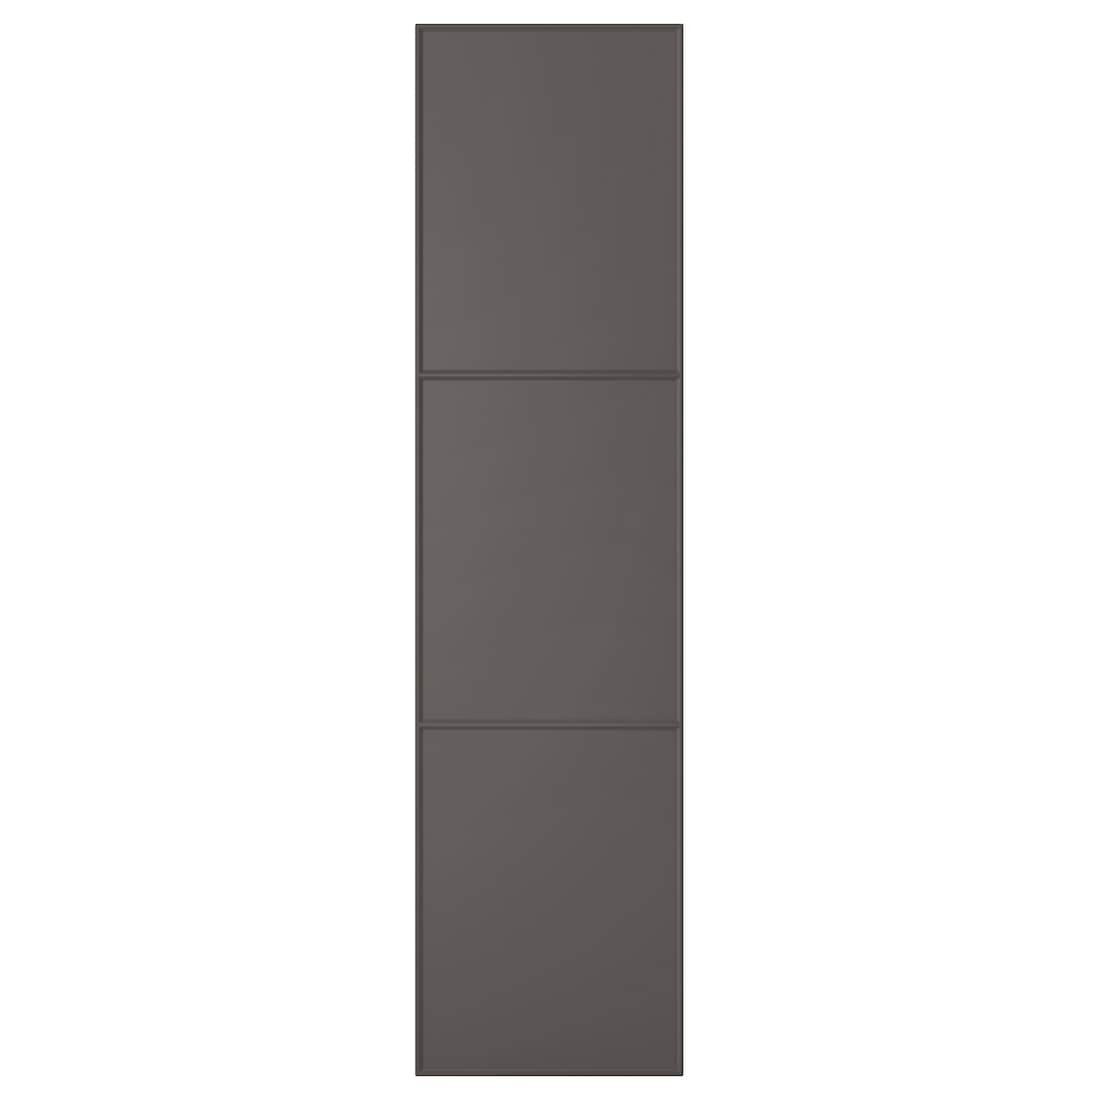 IKEA MERÅKER МЕРОКЕР Двери с петлями, темно-серый, 50x195 cм 89122828 891.228.28